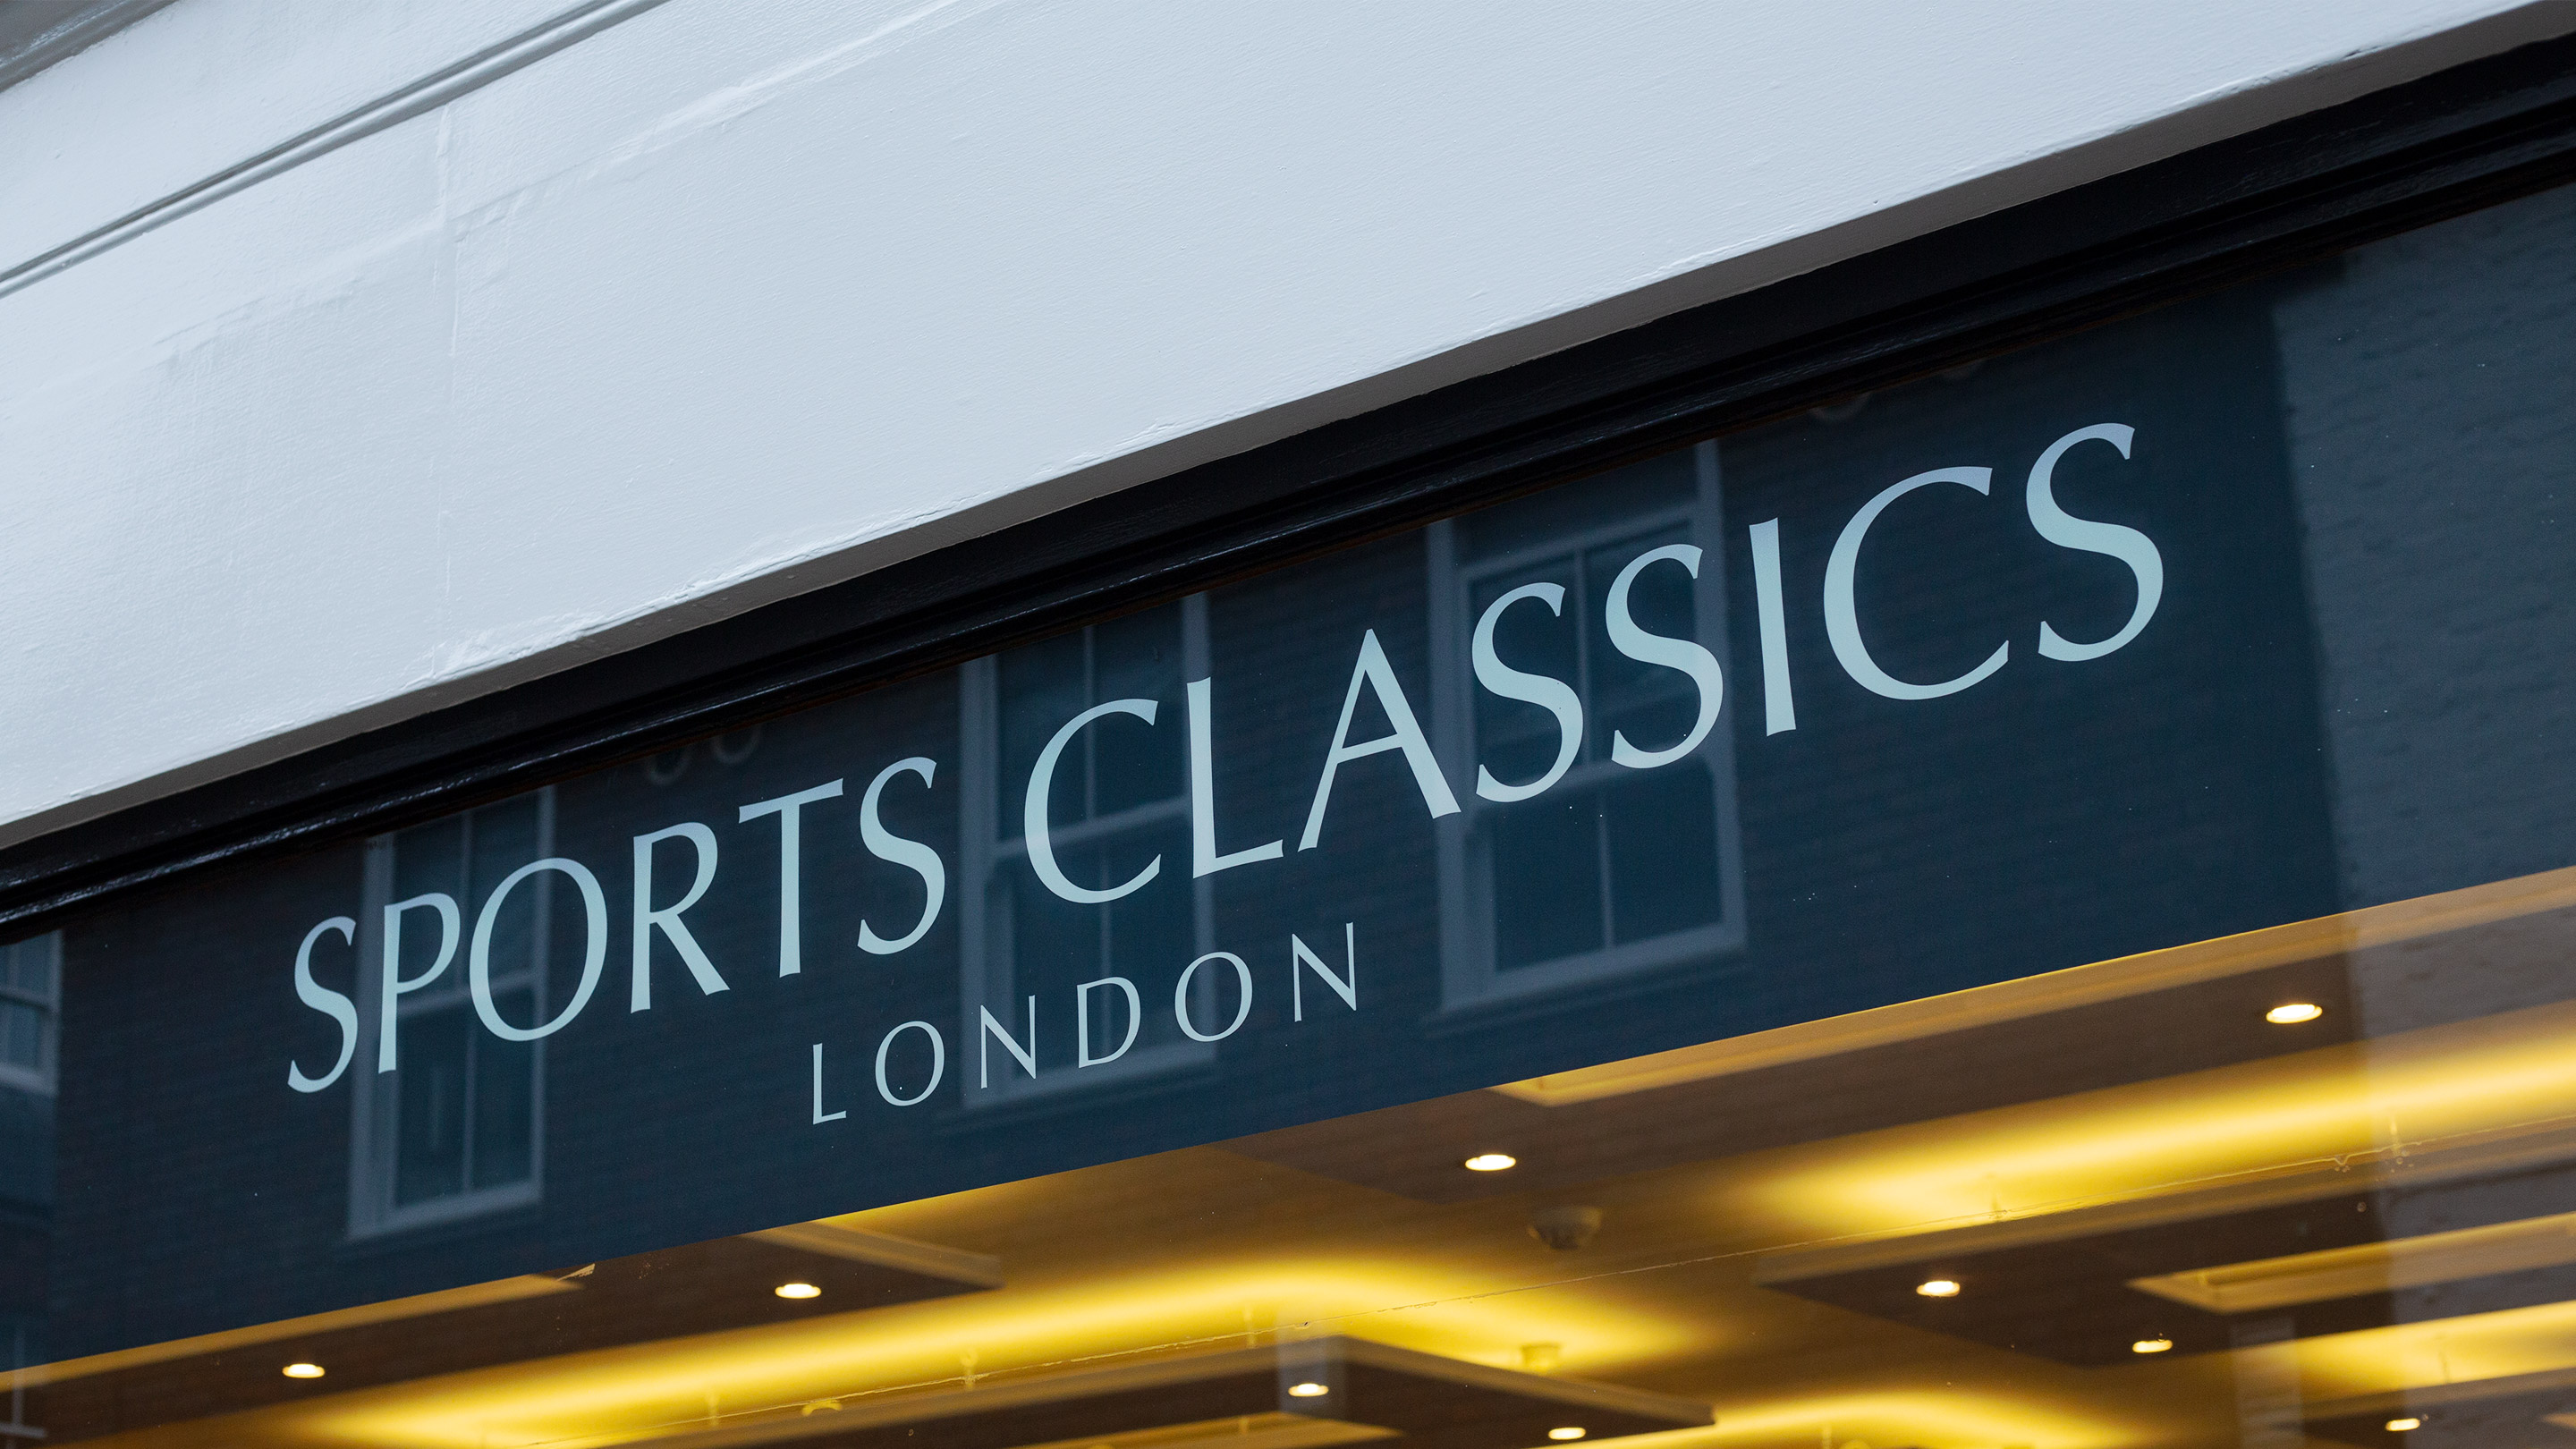 Sports Classics London